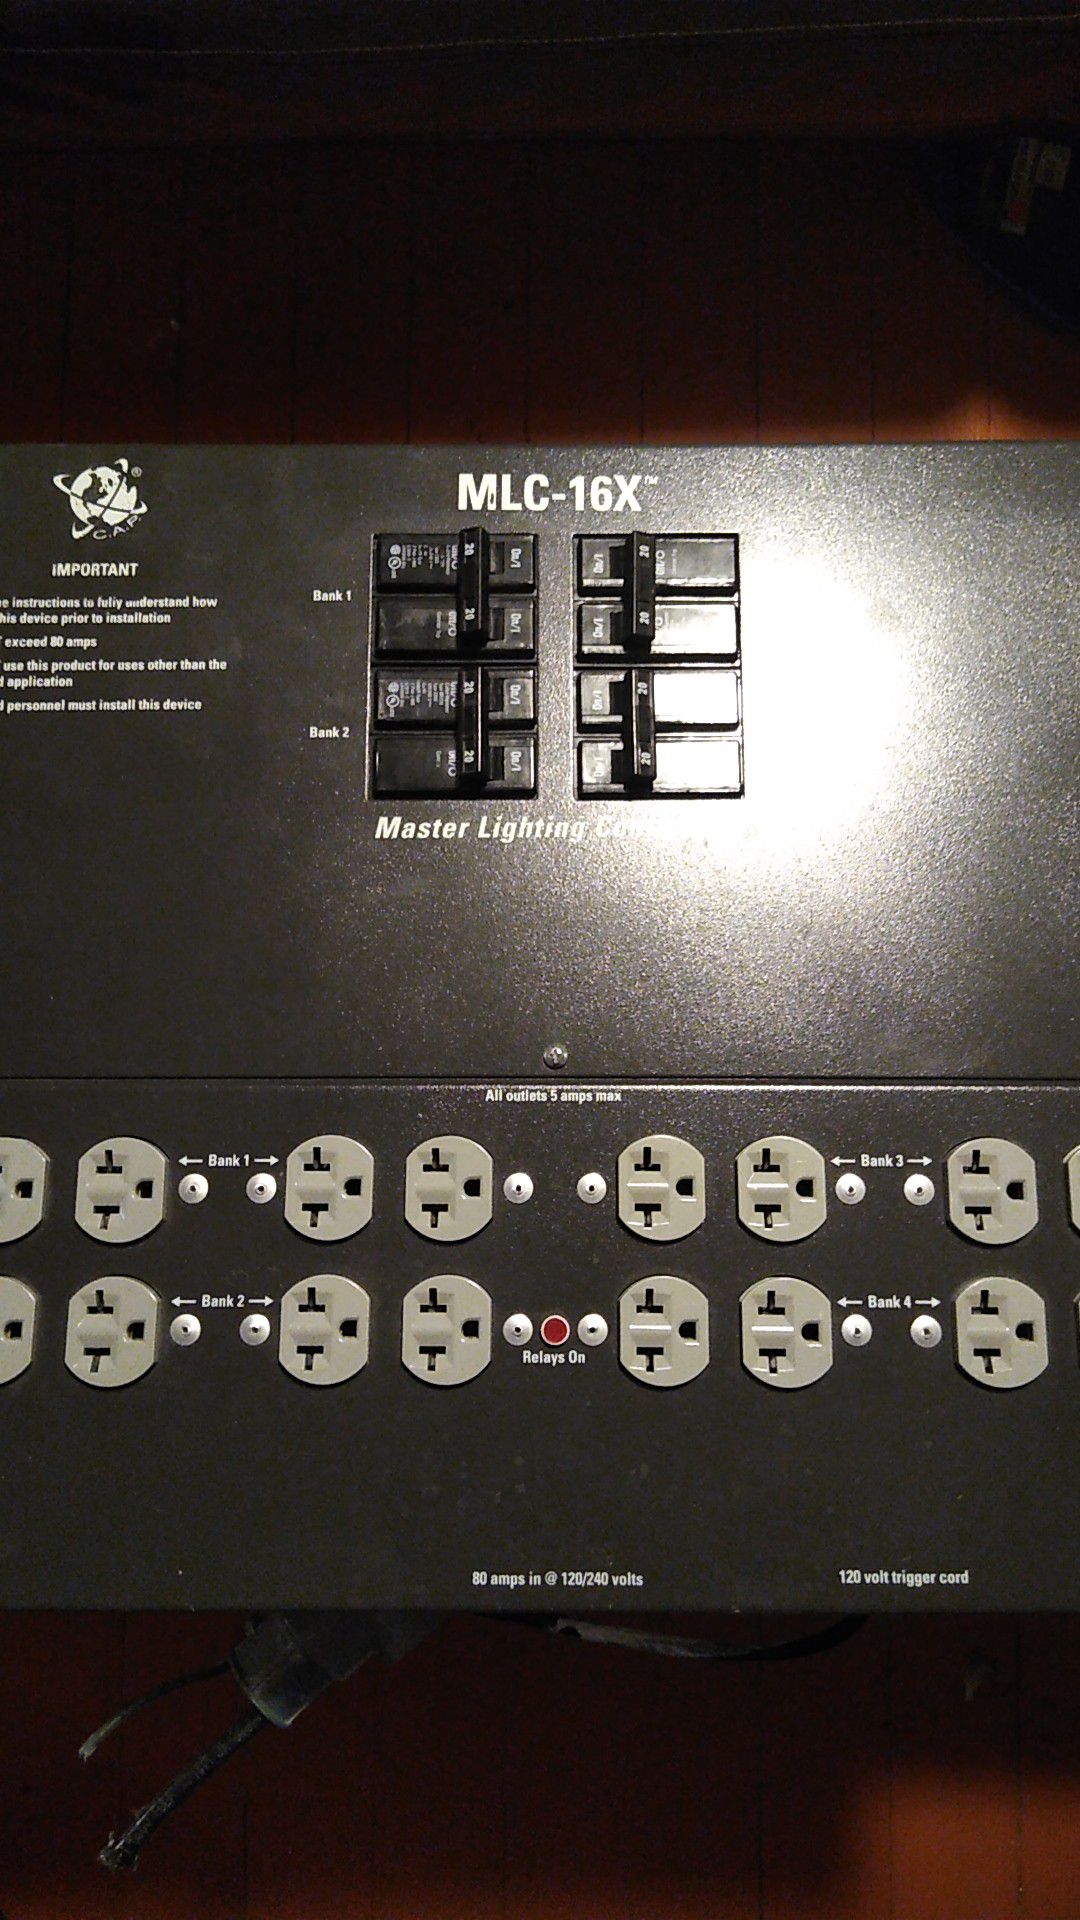 MLC-16X master lighting controller $200